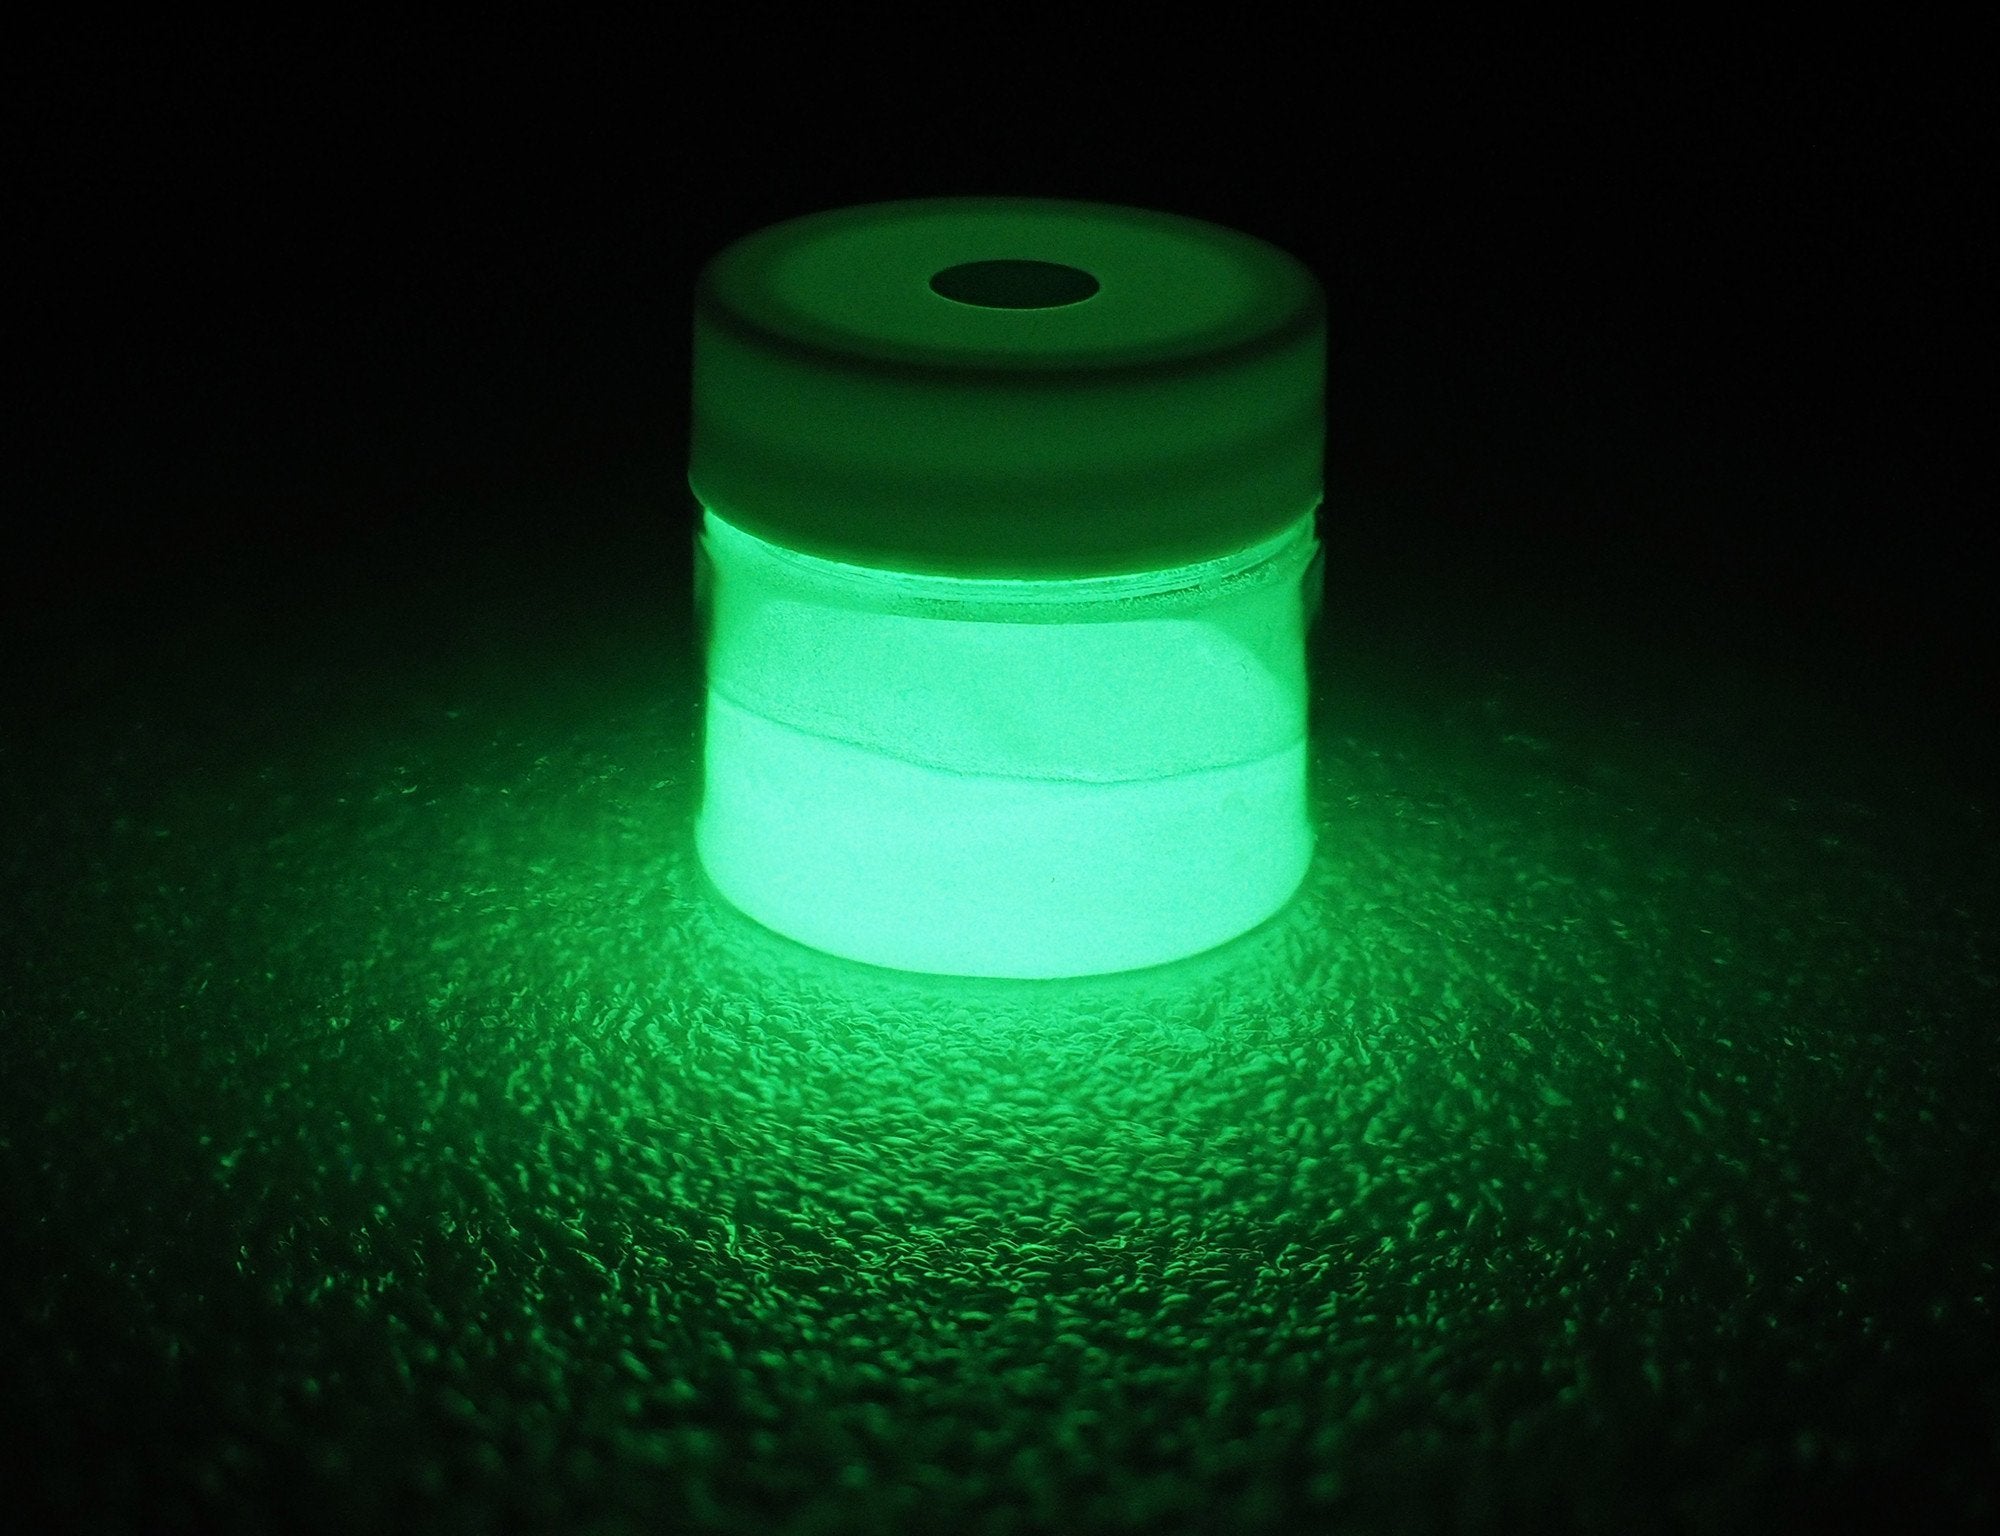 Phosphorescent Pigment Powder, Luminous Glow Powder - China Glow